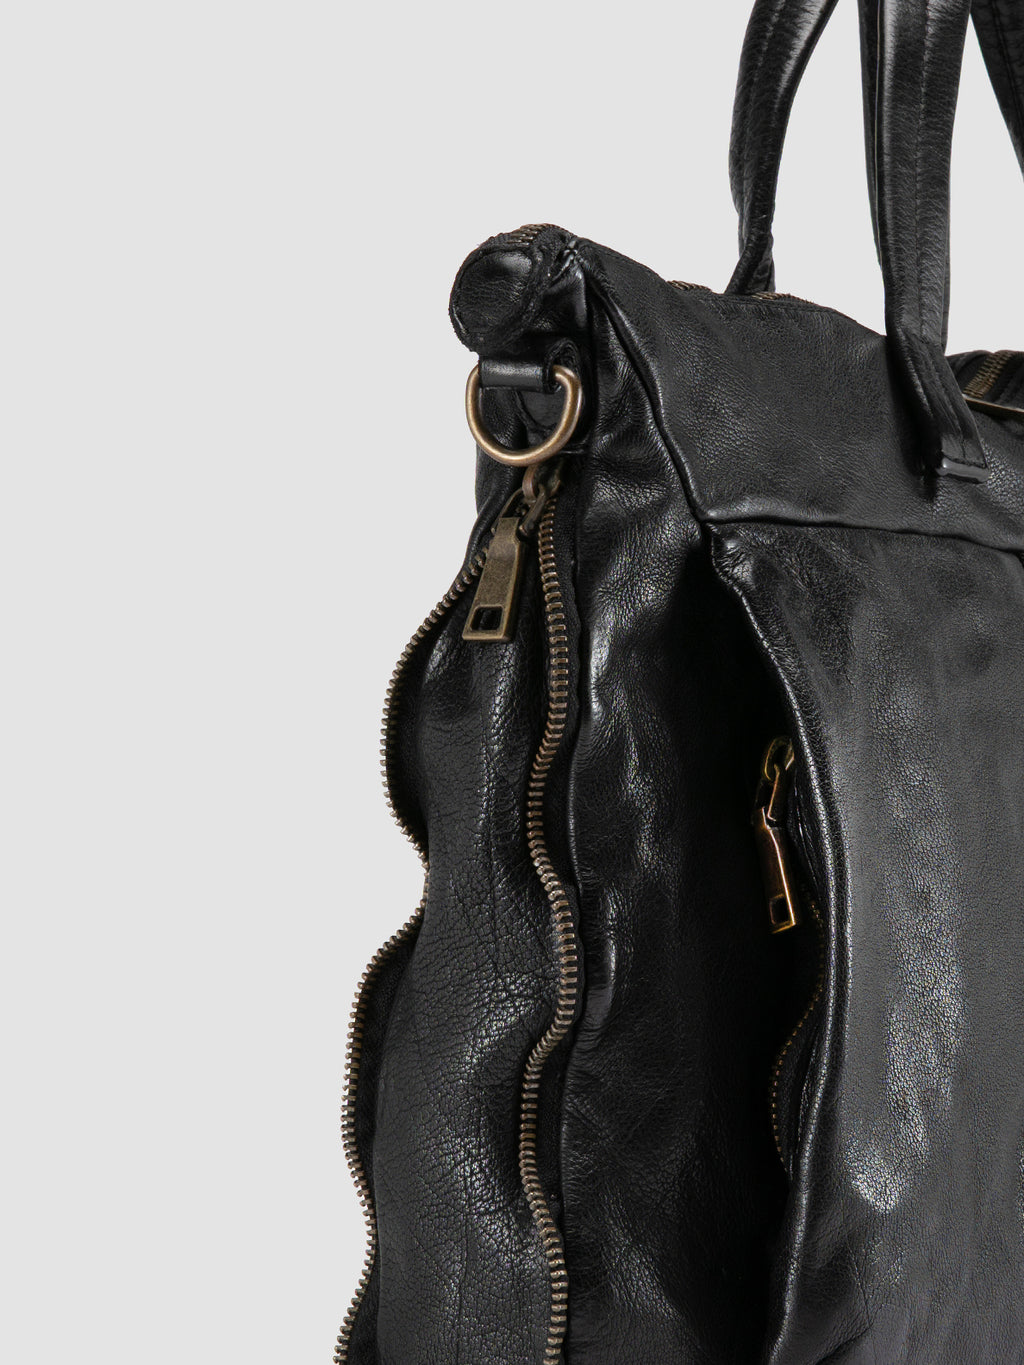 HELMET 046 - Black Leather Briefcase